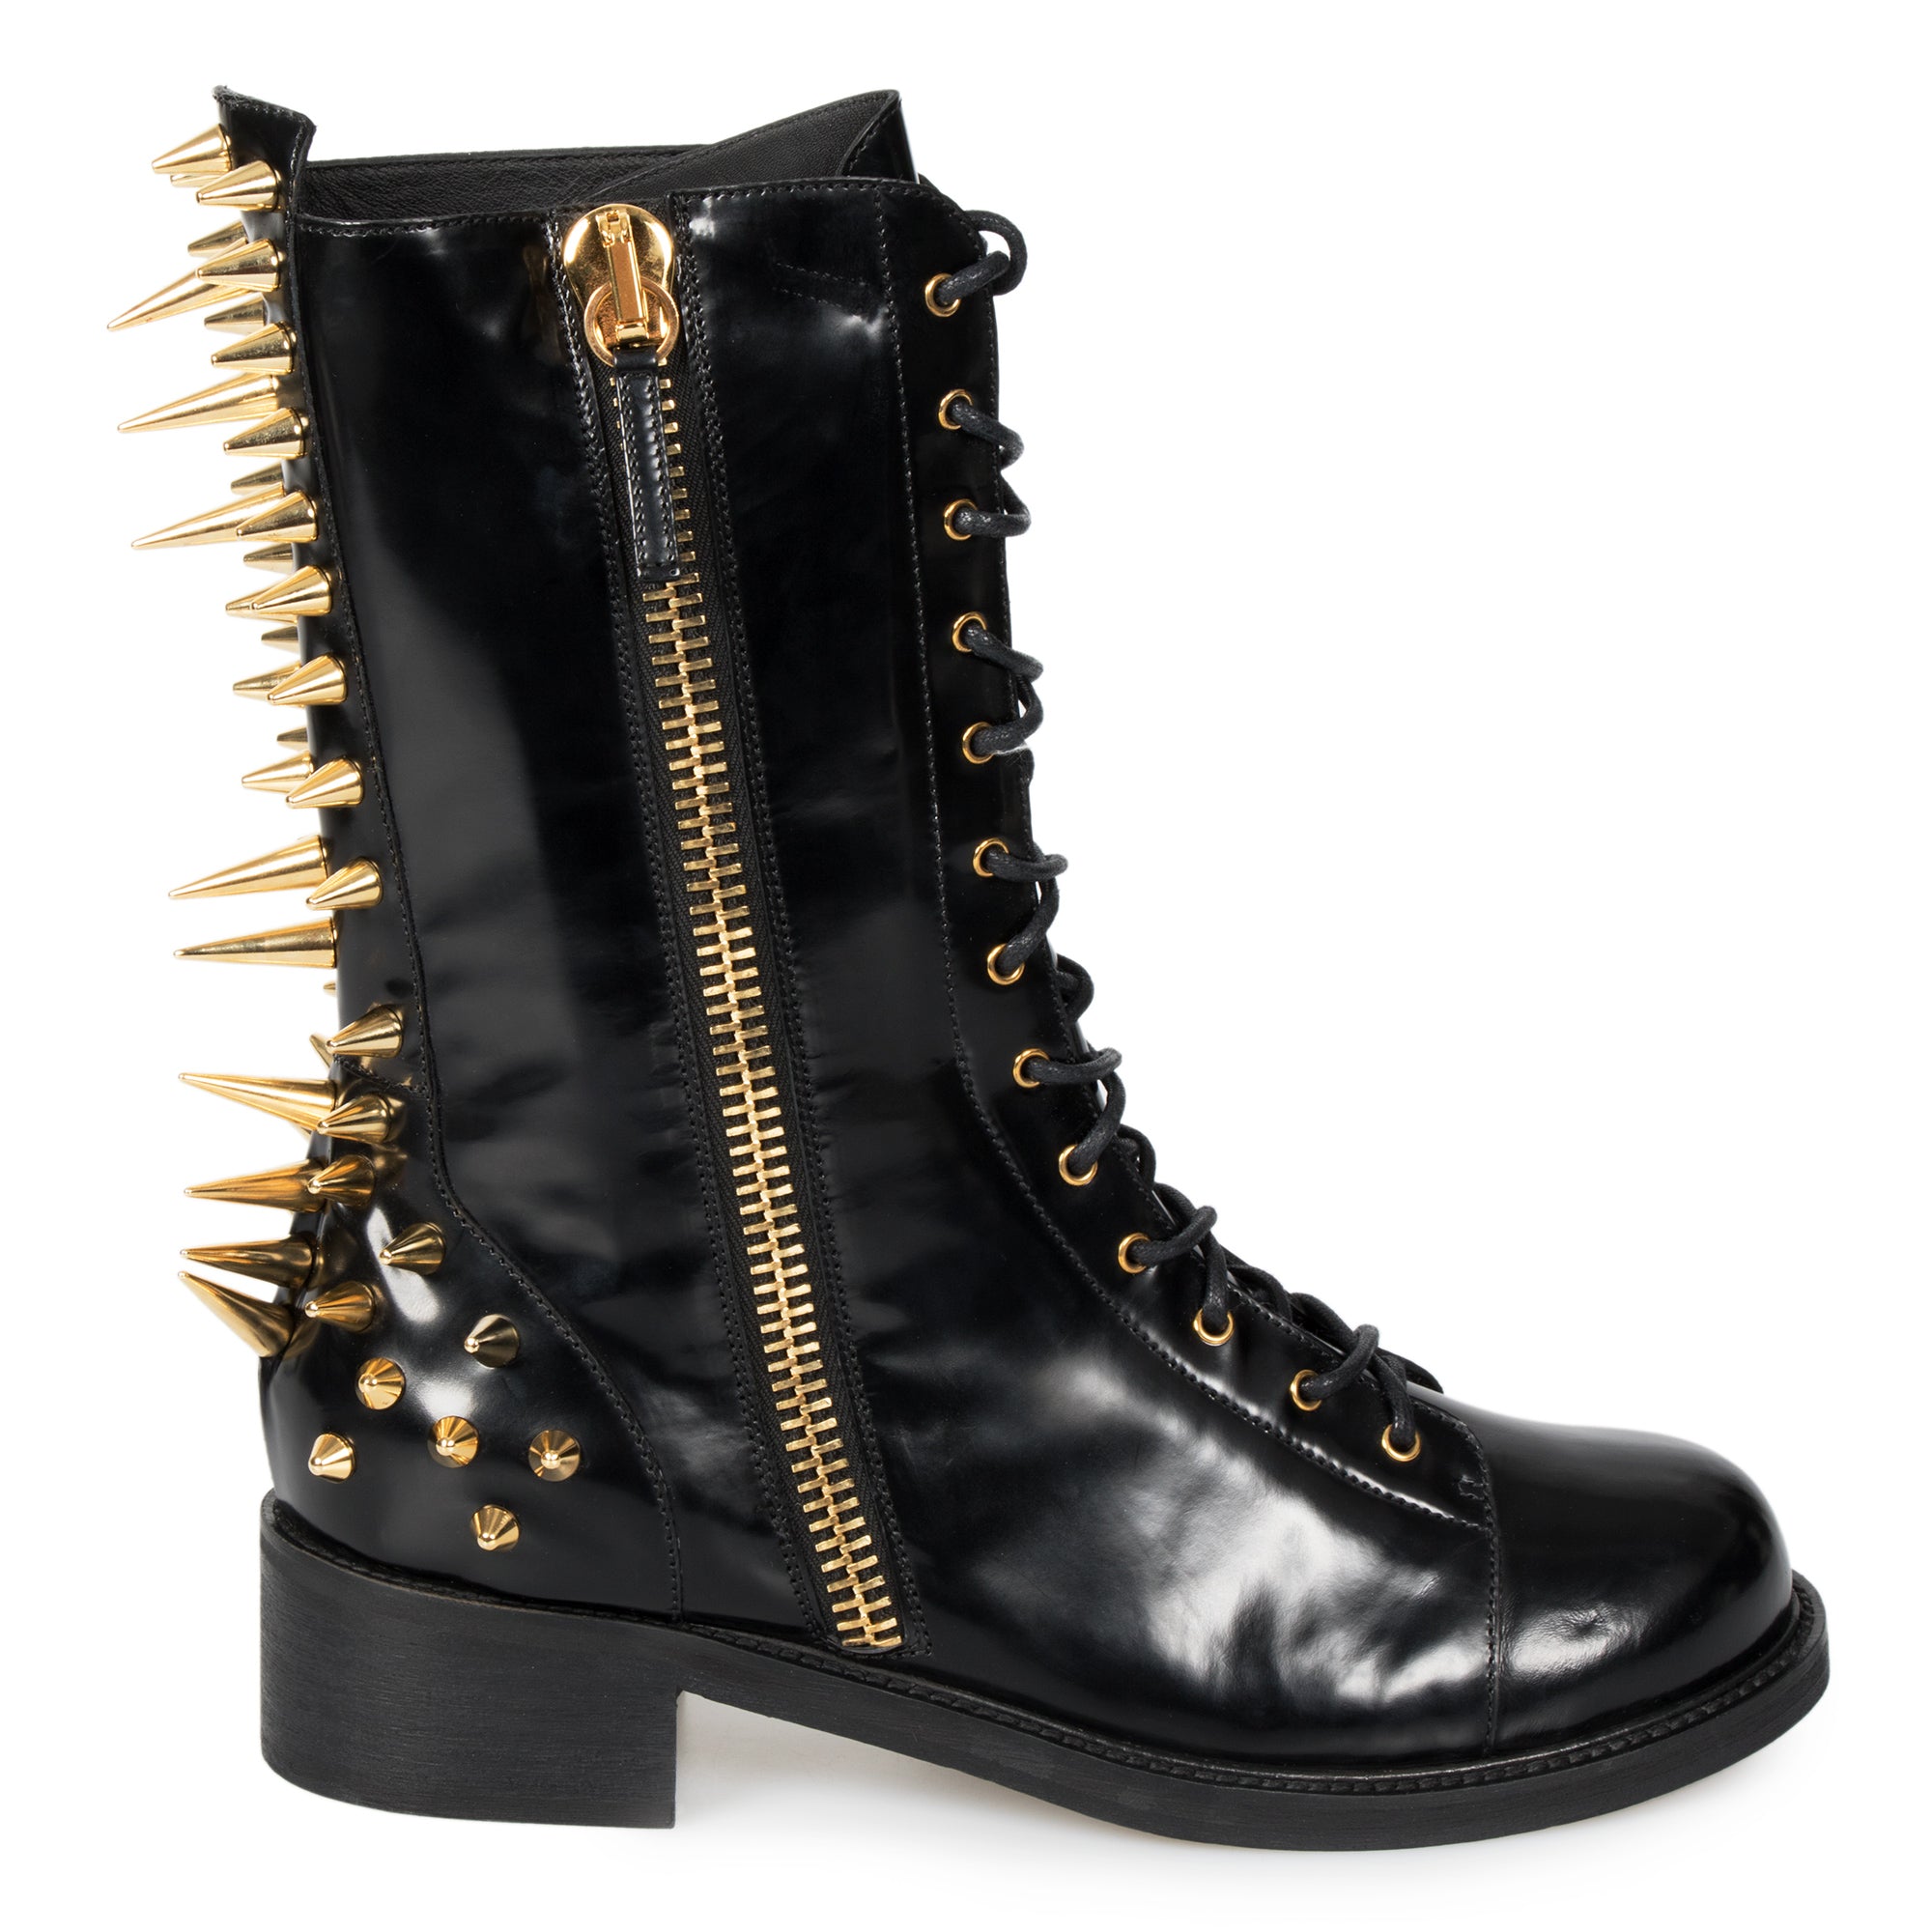 Giuseppe Zanotti Blok Spiked Military Black Patent Leather Boots